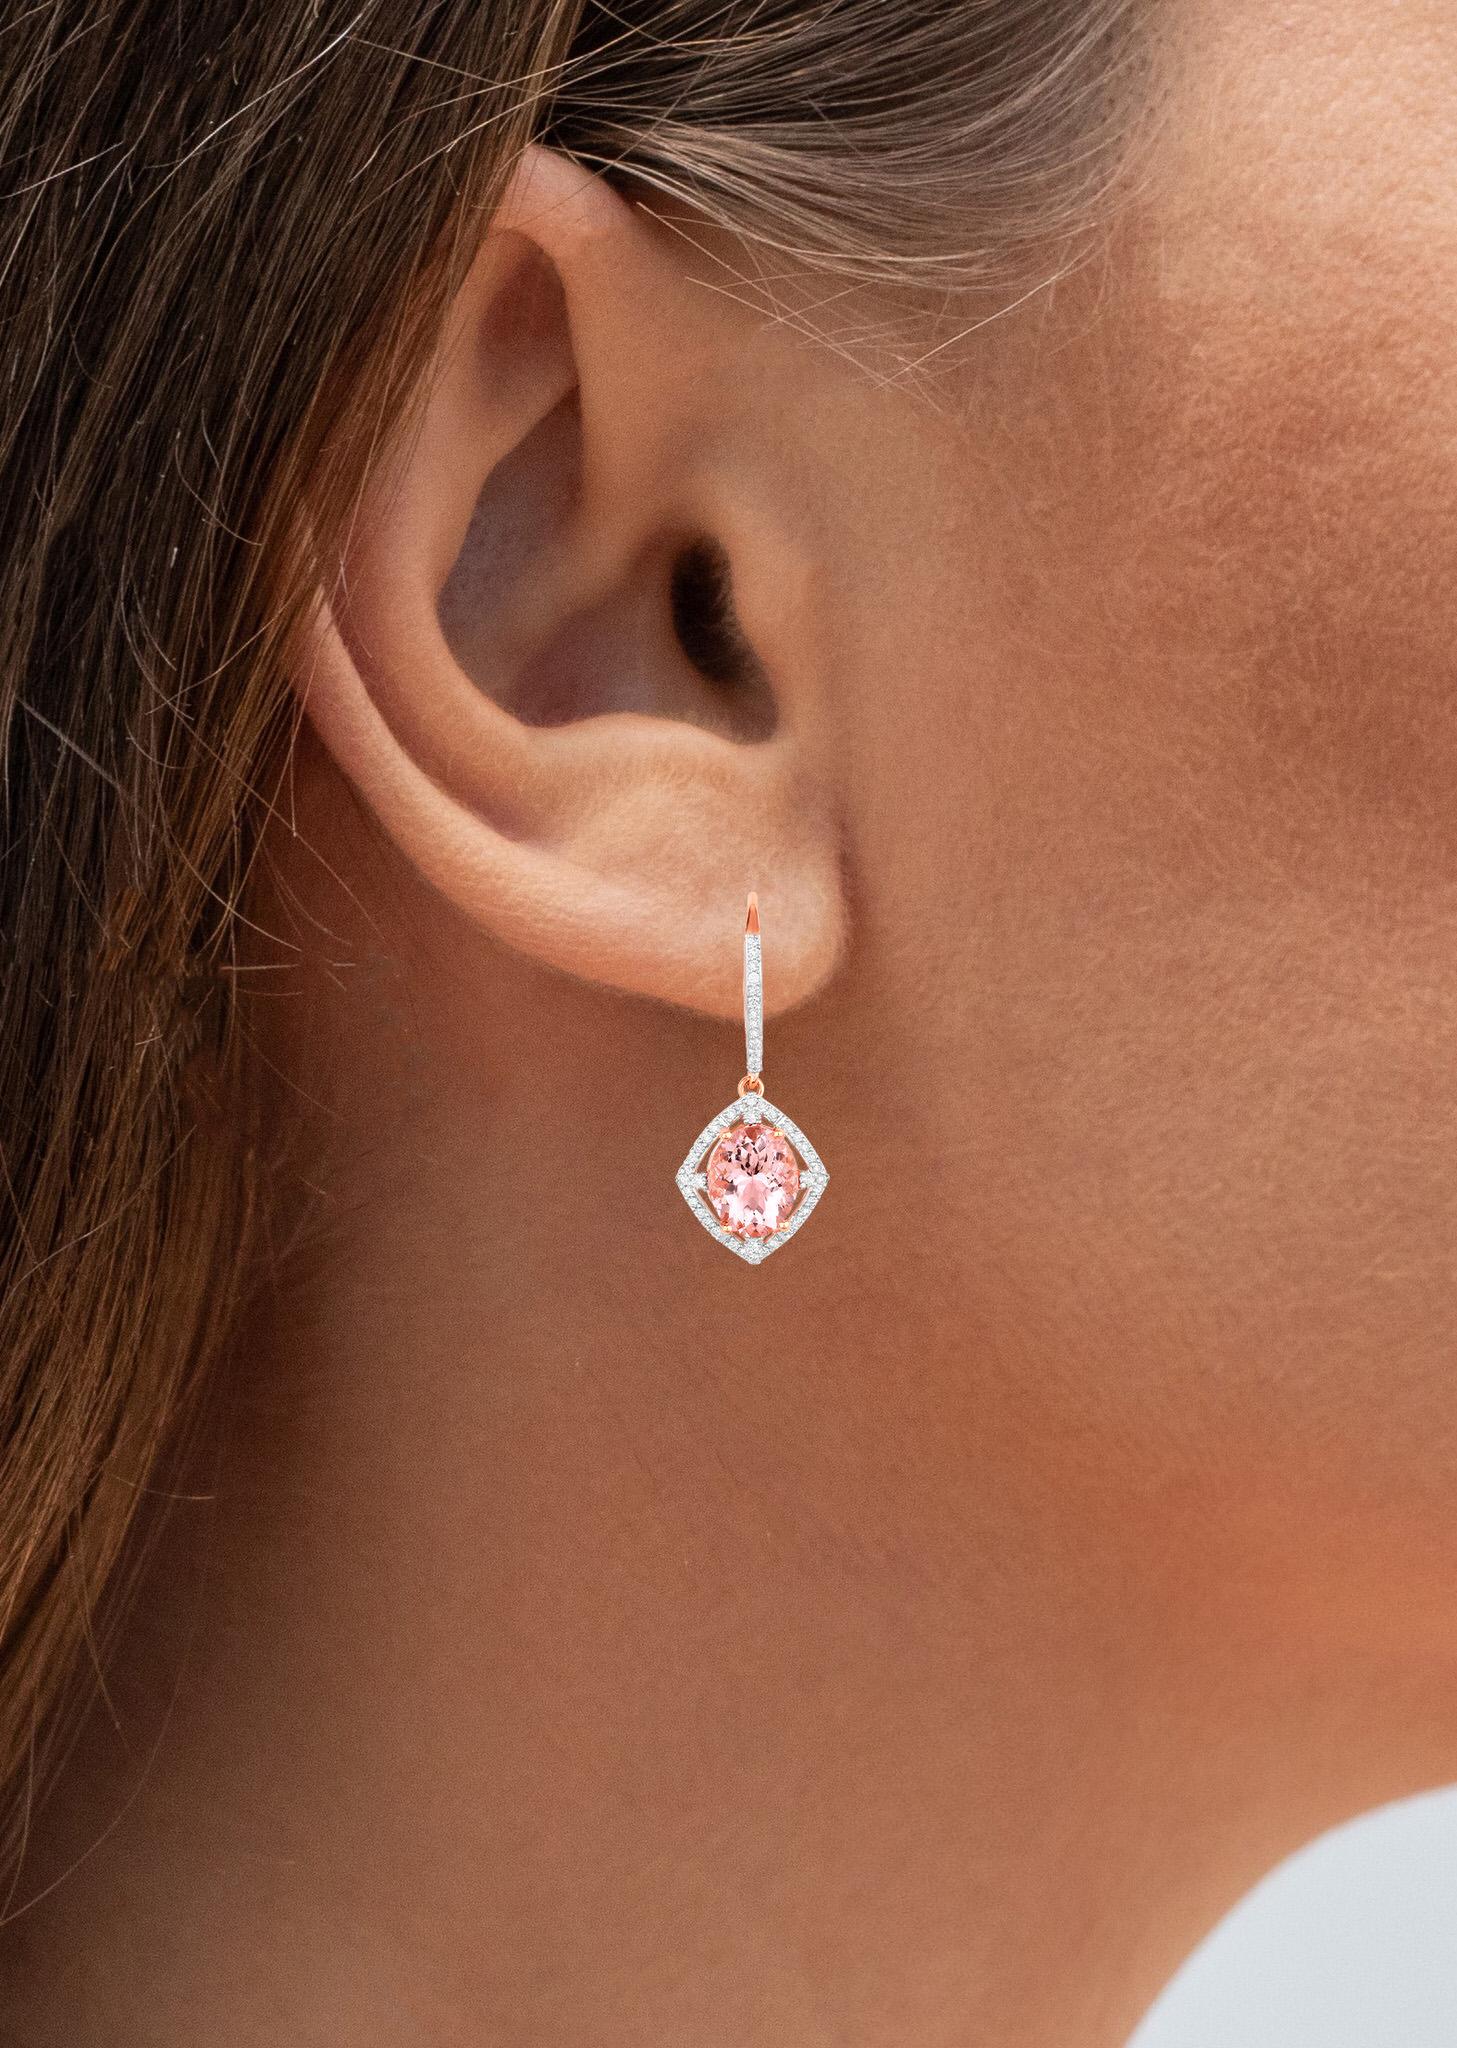 Contemporary Morganite Dangle Earrings Diamond Setting 5.58 Carats 14K Rose Gold For Sale